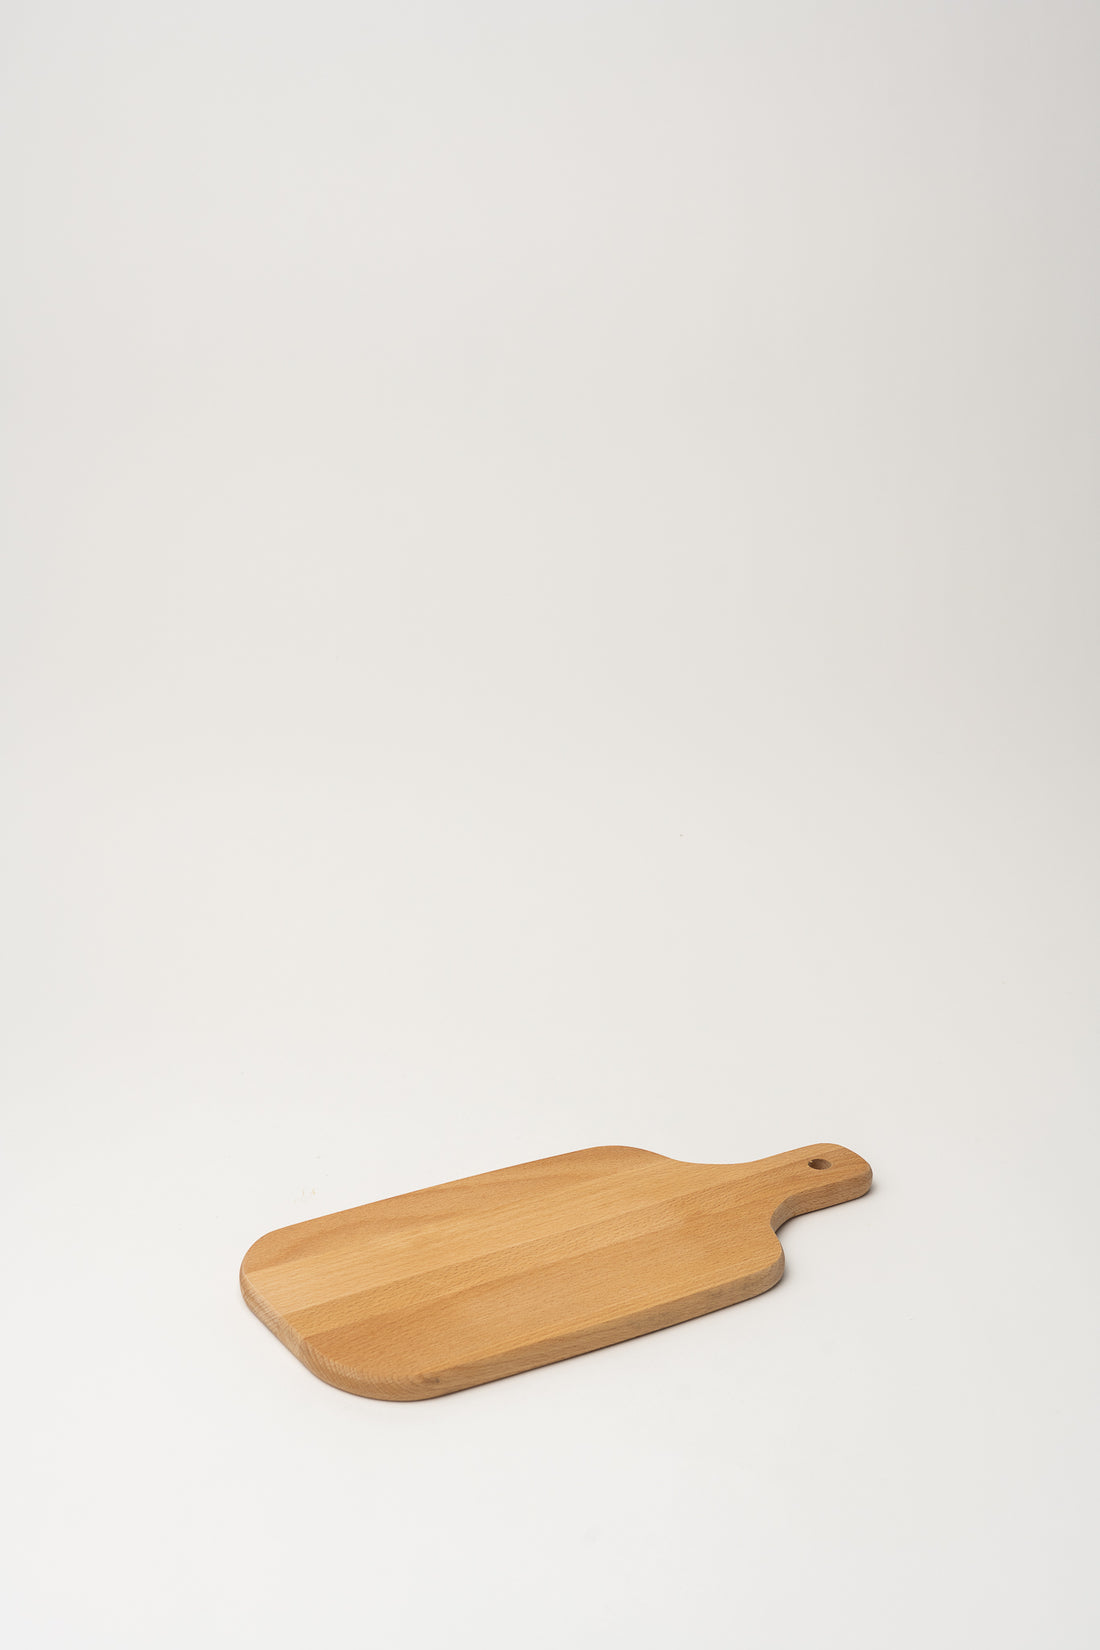 Wooden Serving Platter - Rectangle short